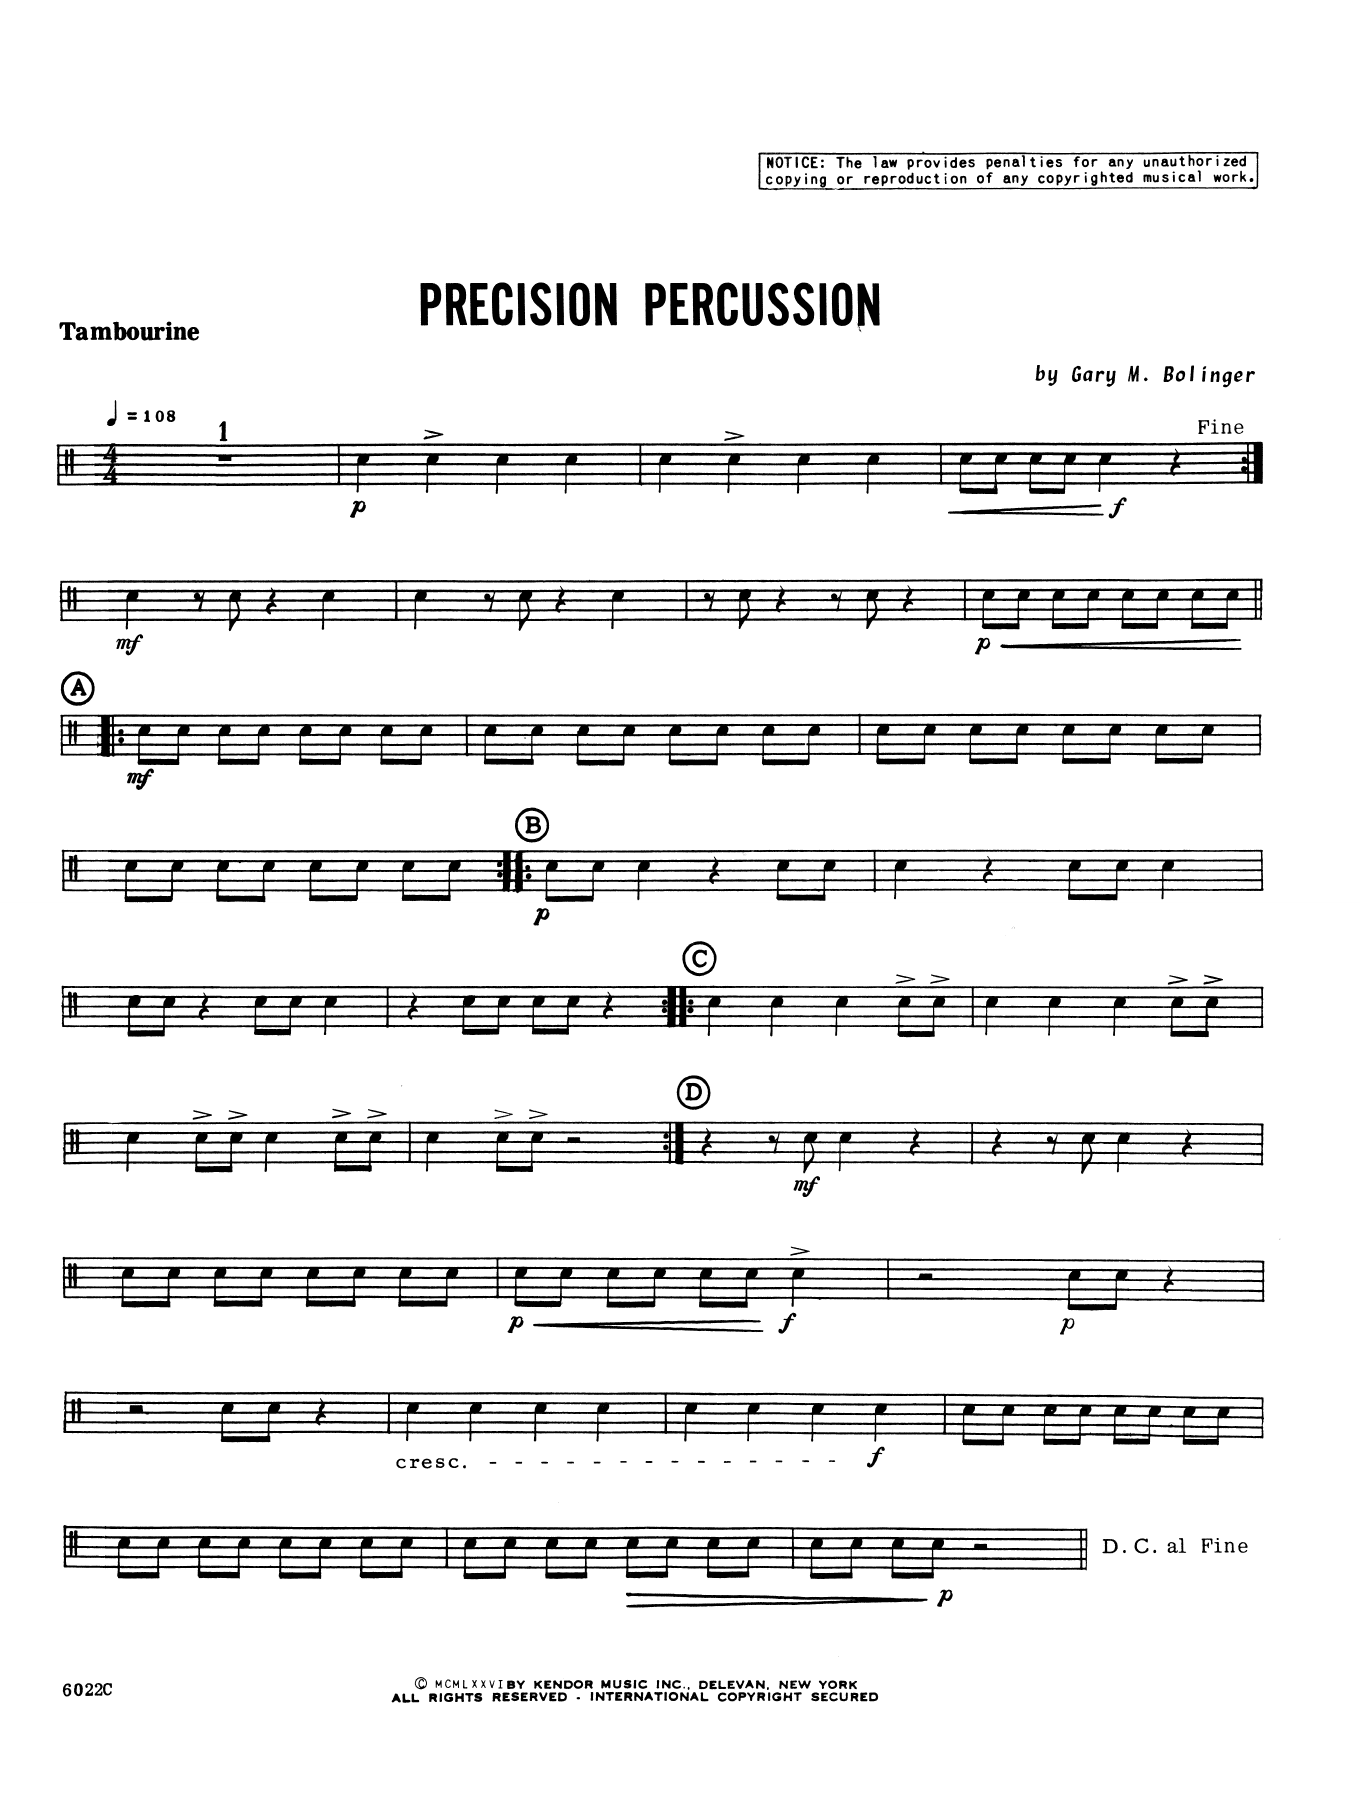 Download Gary M. Bolinger Precision Percussion - Percussion 3 Sheet Music